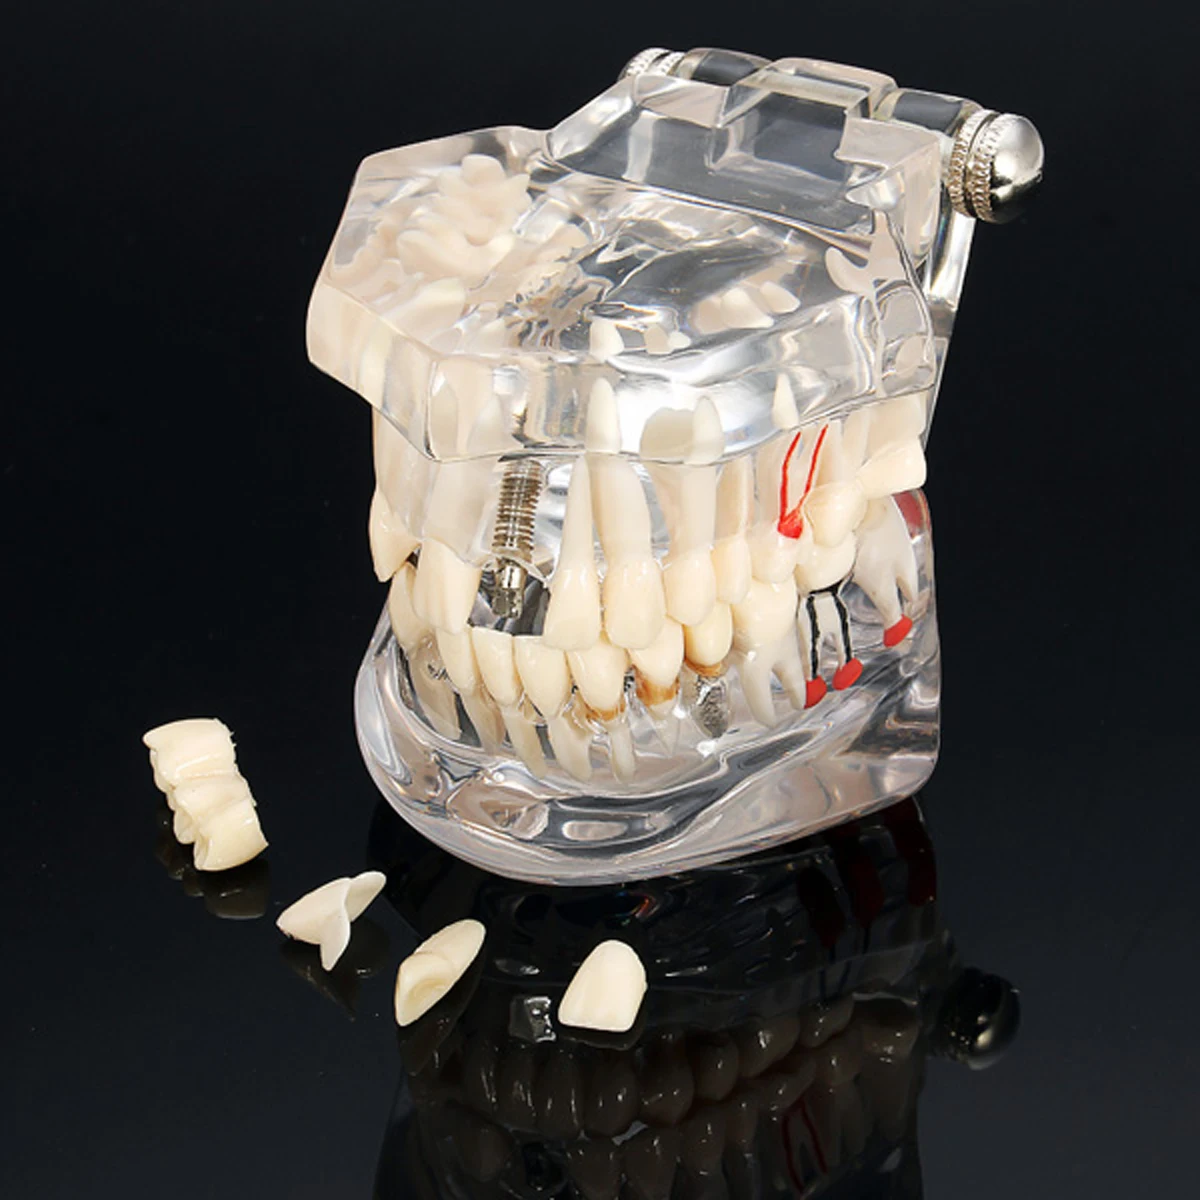 

New Dental Model Teeth Implant Restoration Bridge Teaching Study Medical Science Disease Dentist Dentistry Products Dental Gift